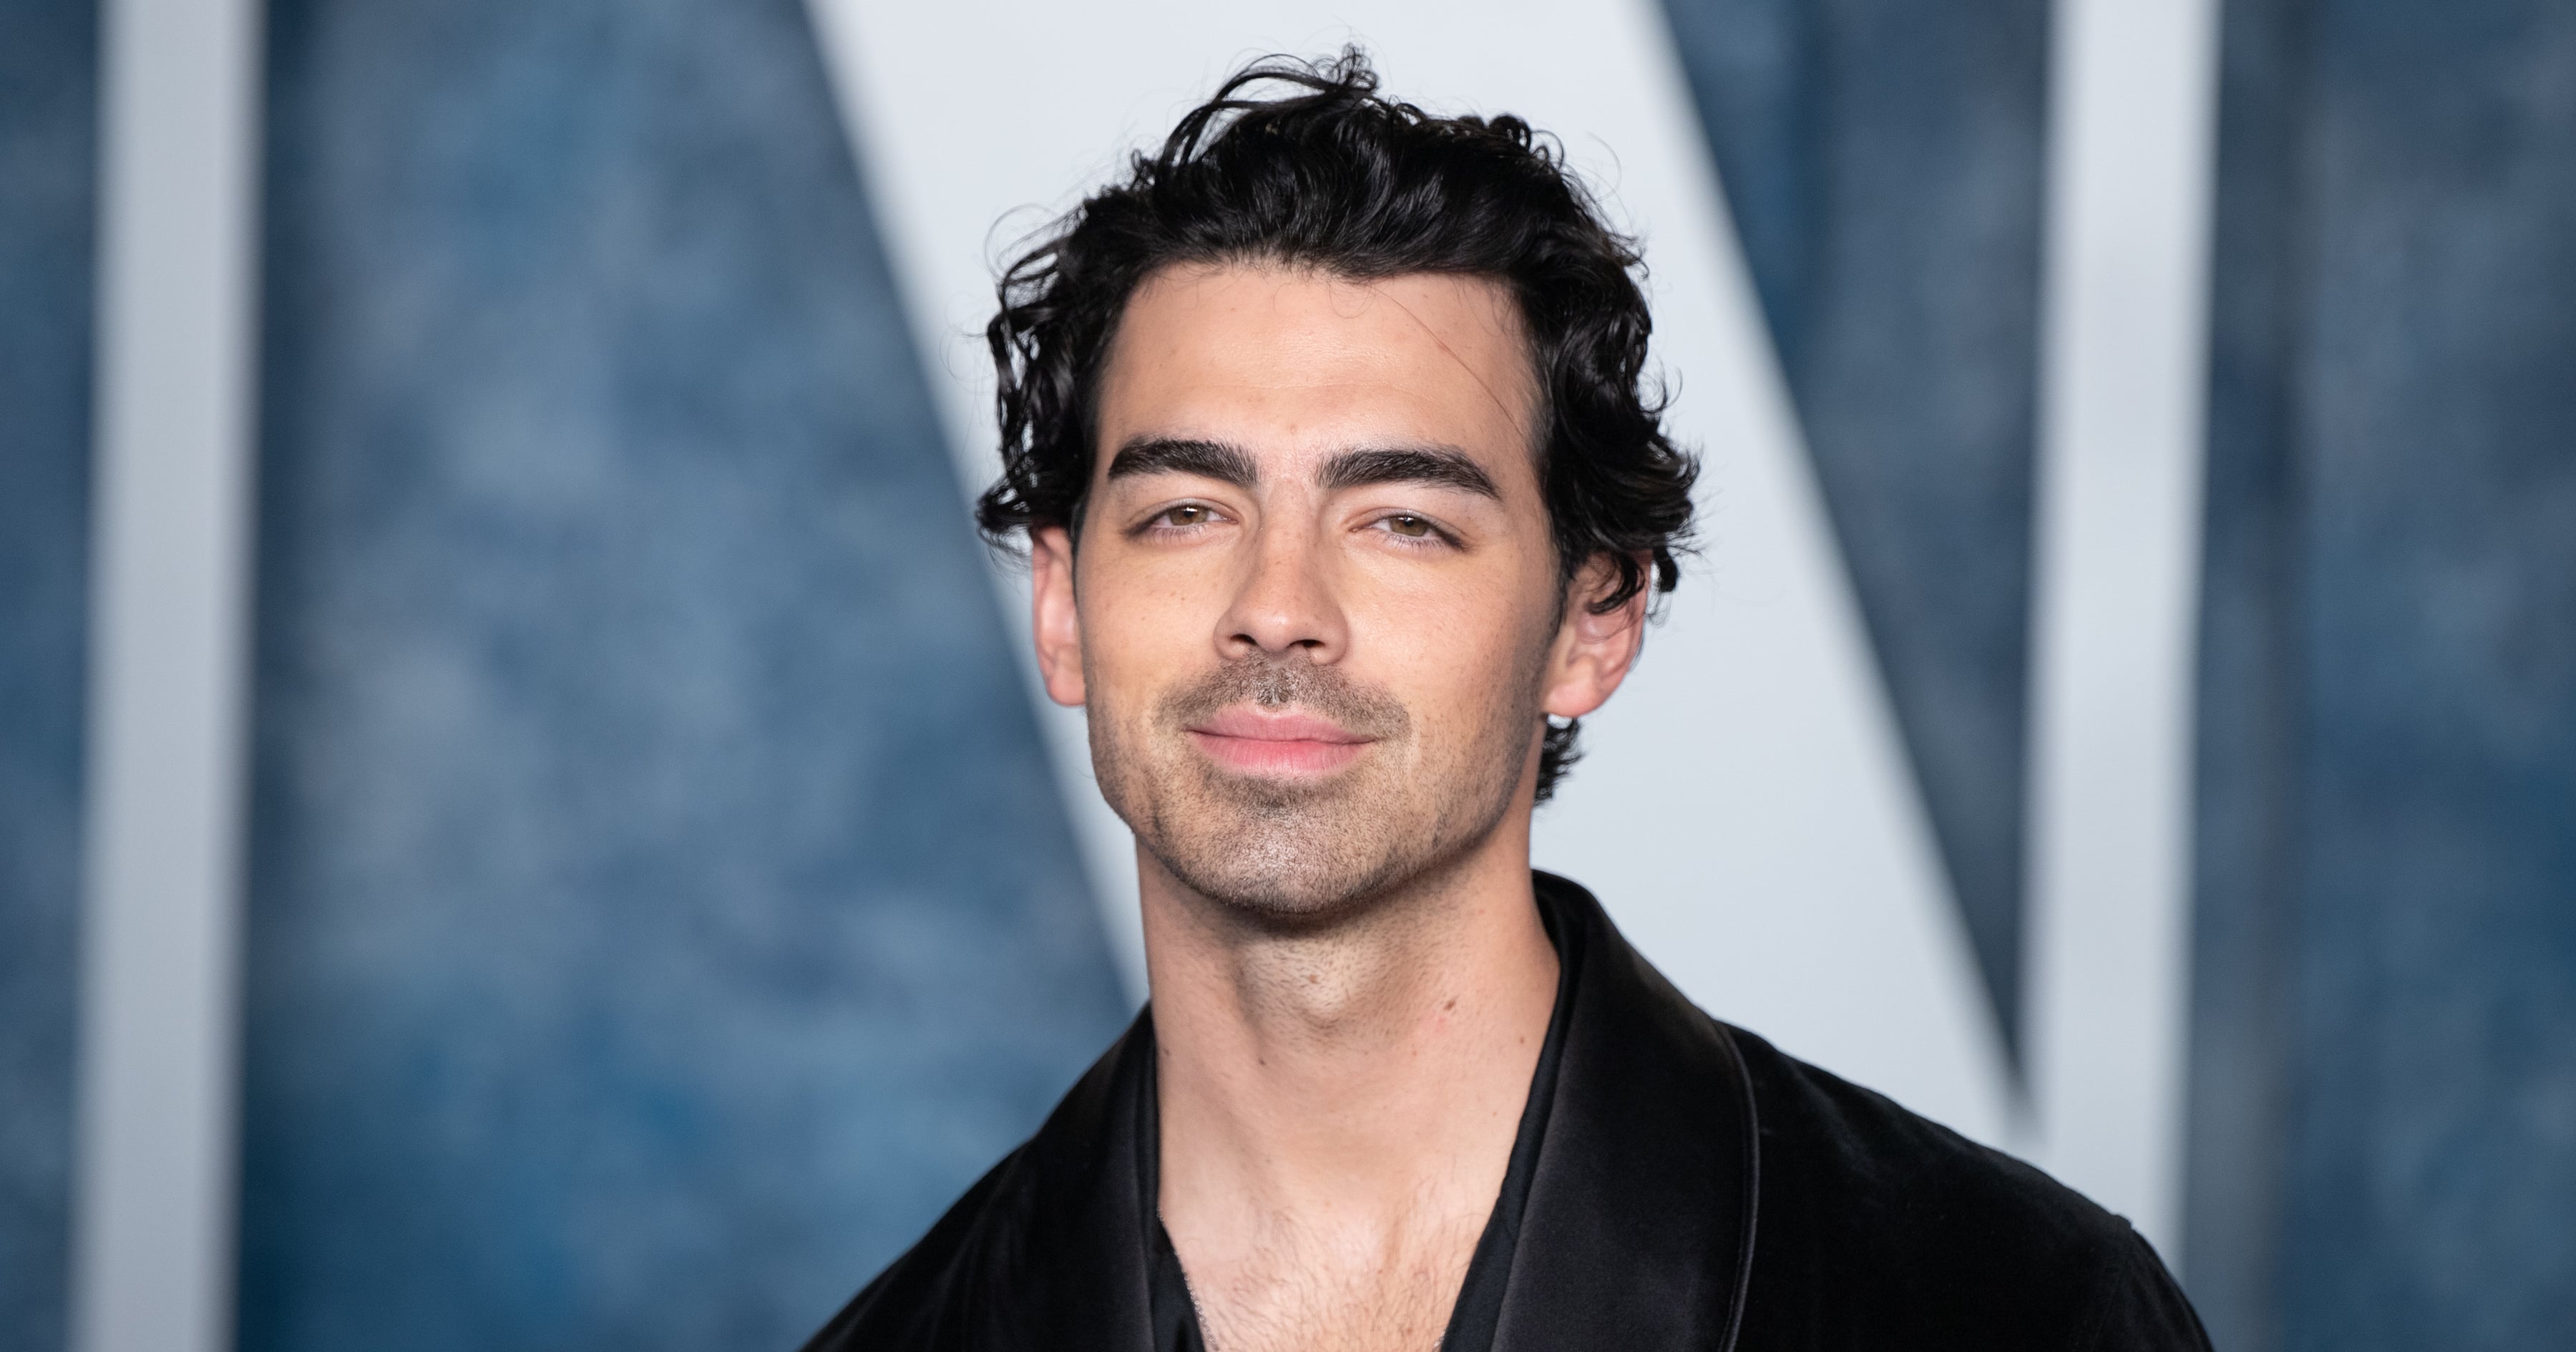 Joe Jonas Says He Feels Like Part of “Some Secret Club” After Pooping Himself on Stage